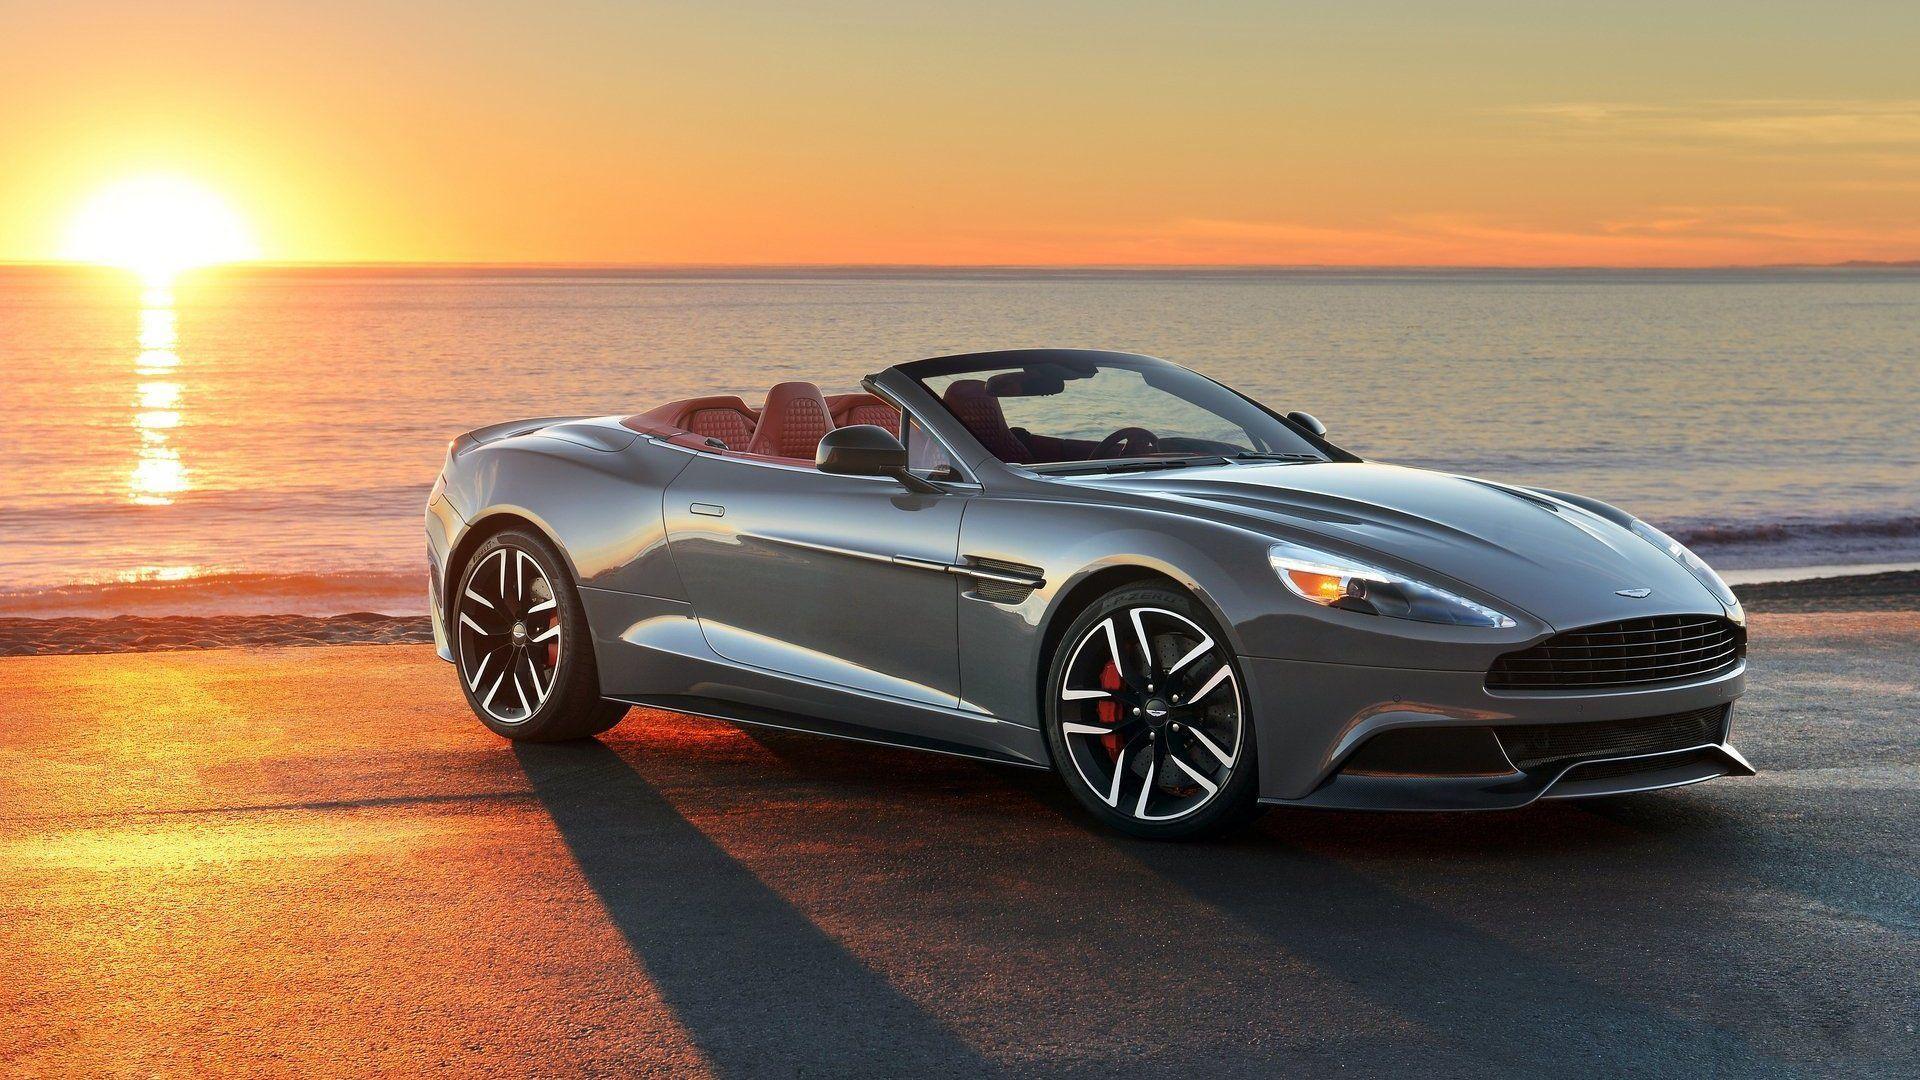 Aston Martin Vanquish Volante Sunset Wallpaper